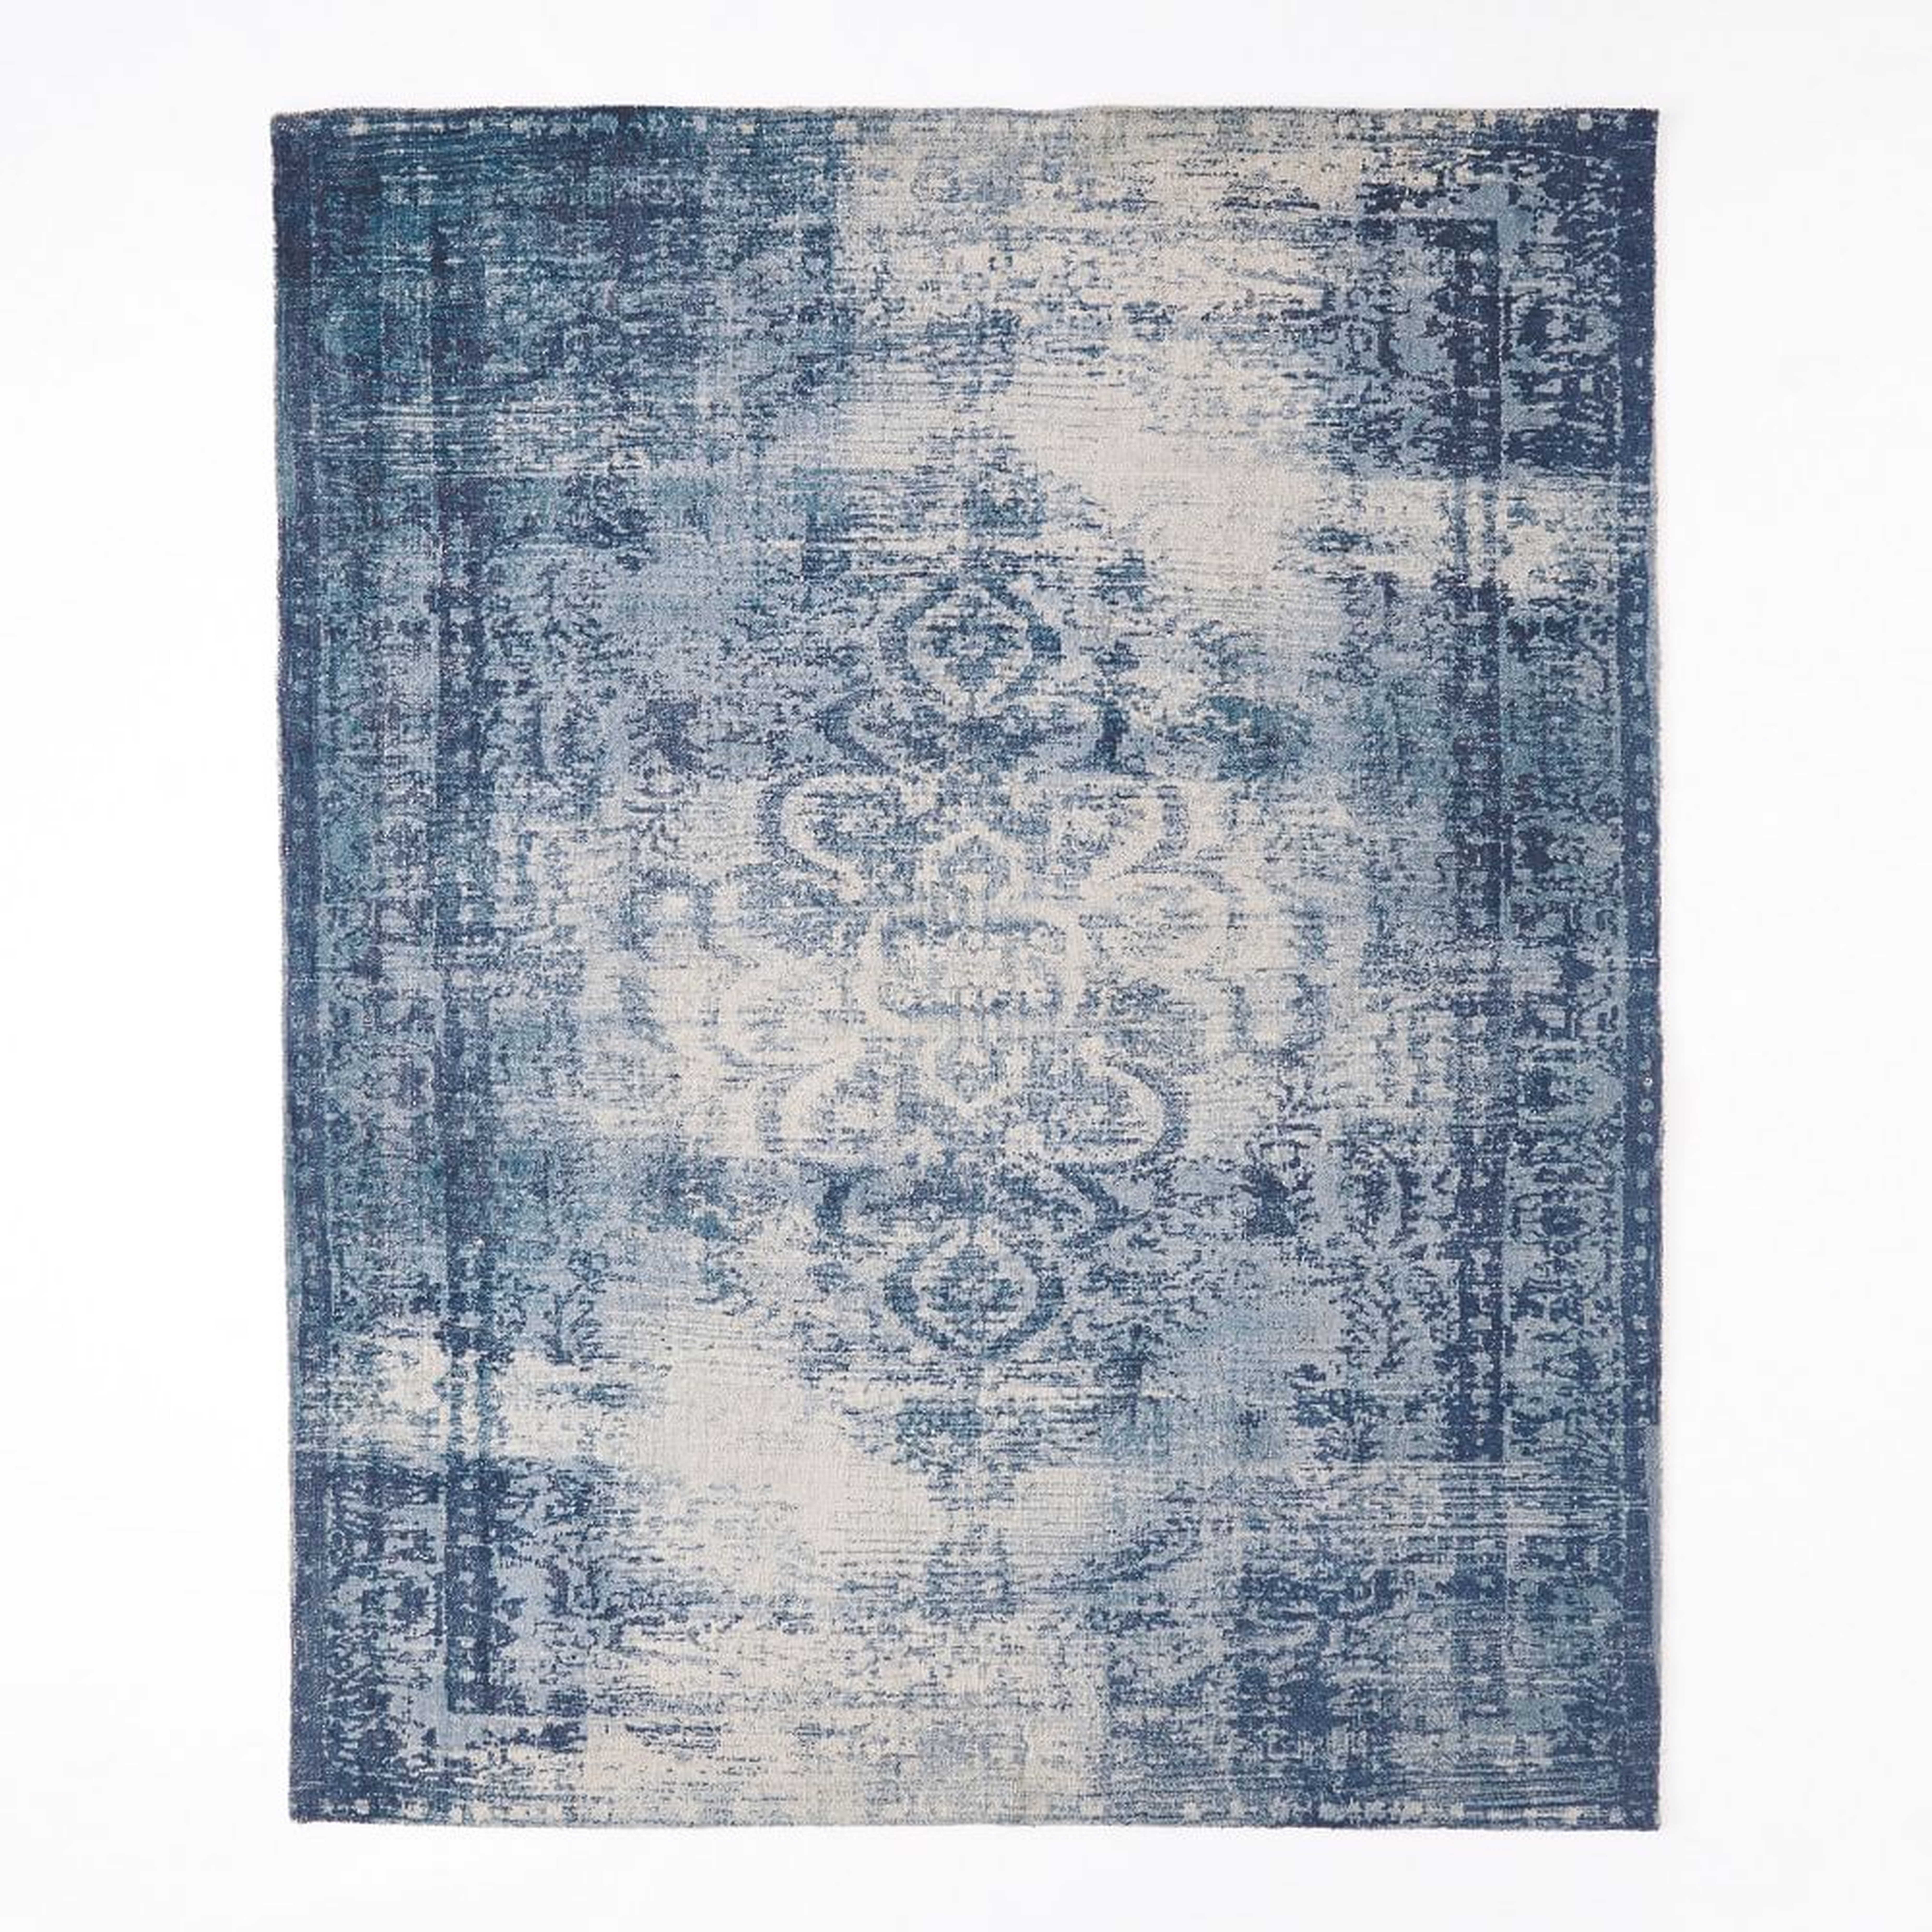 Arabesque Wool Printed Rug, 8x10, Midnight - West Elm